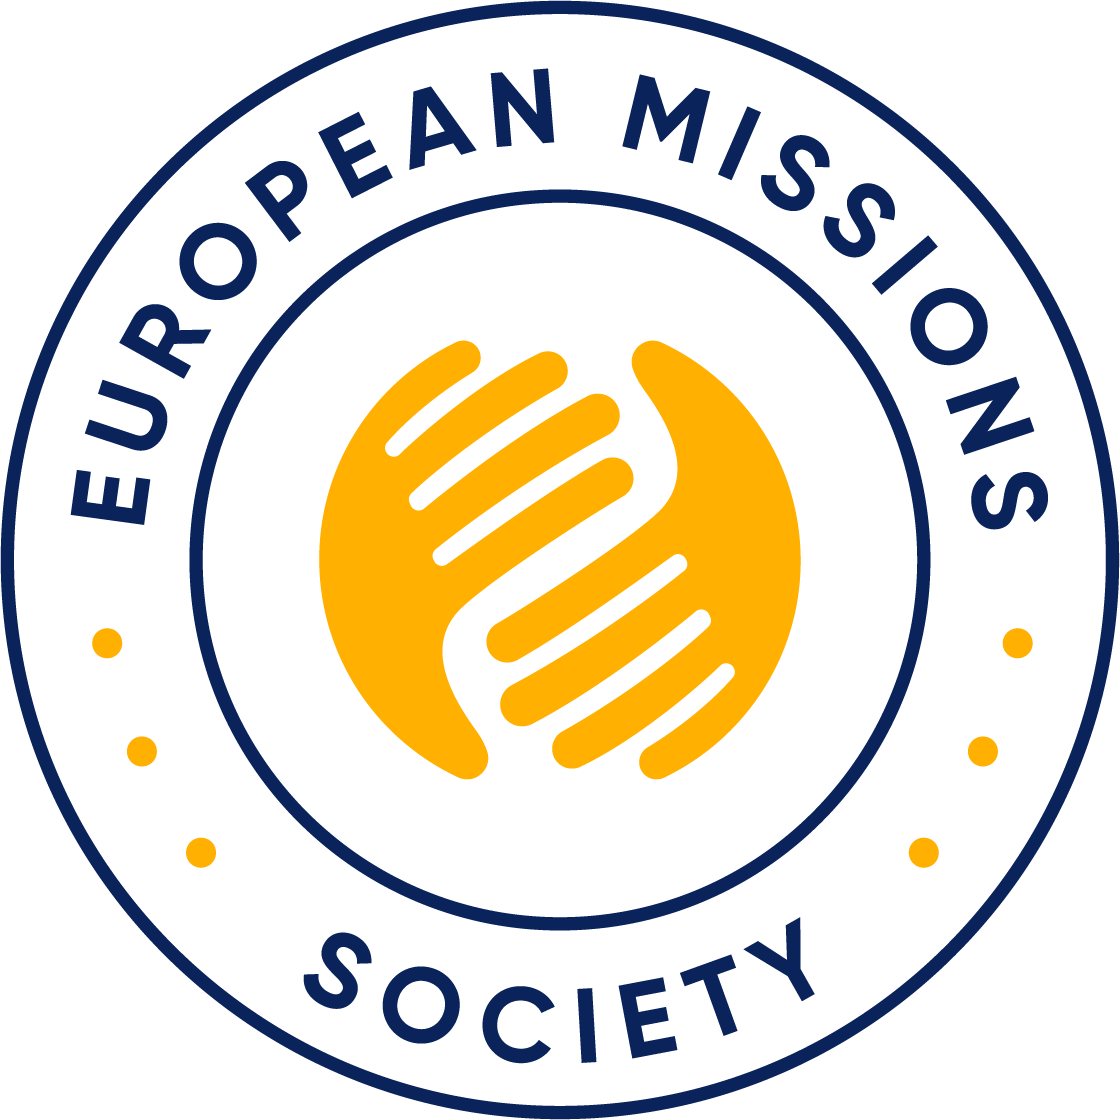 European Missions Society logo